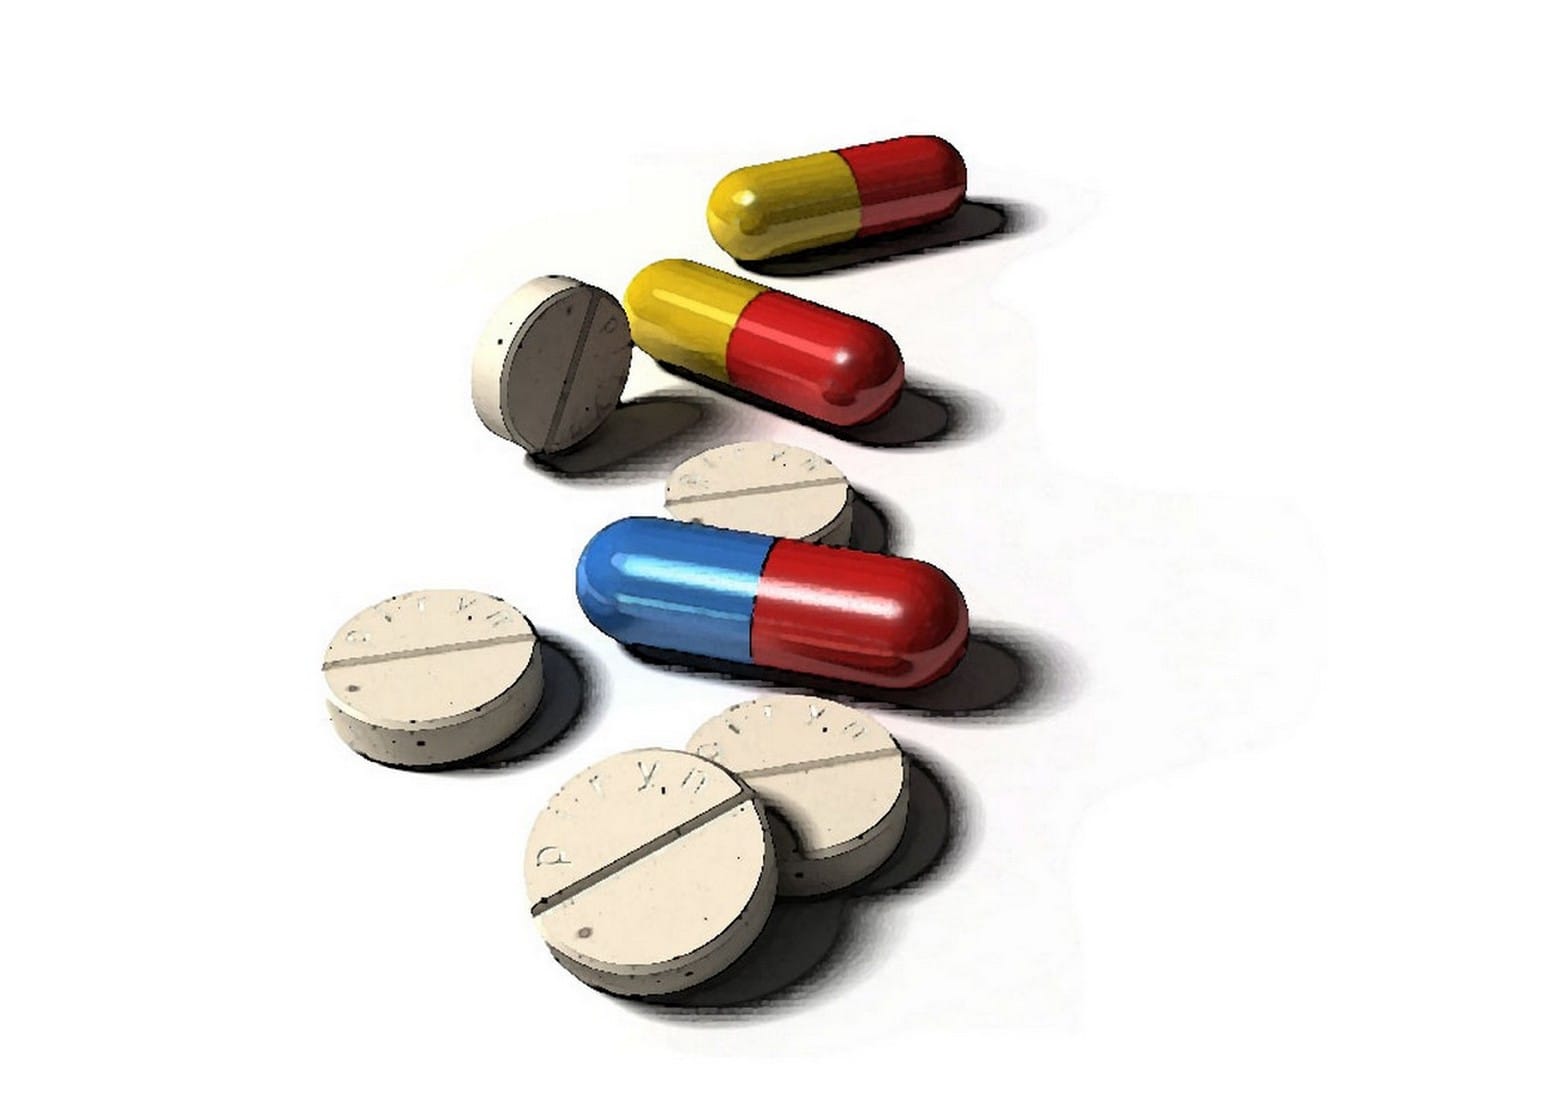 Human pills. Таблетки без фона. Лекарственные препараты антибиотики. Лекарства на белом фоне. Лекарства на прозрачном фоне.